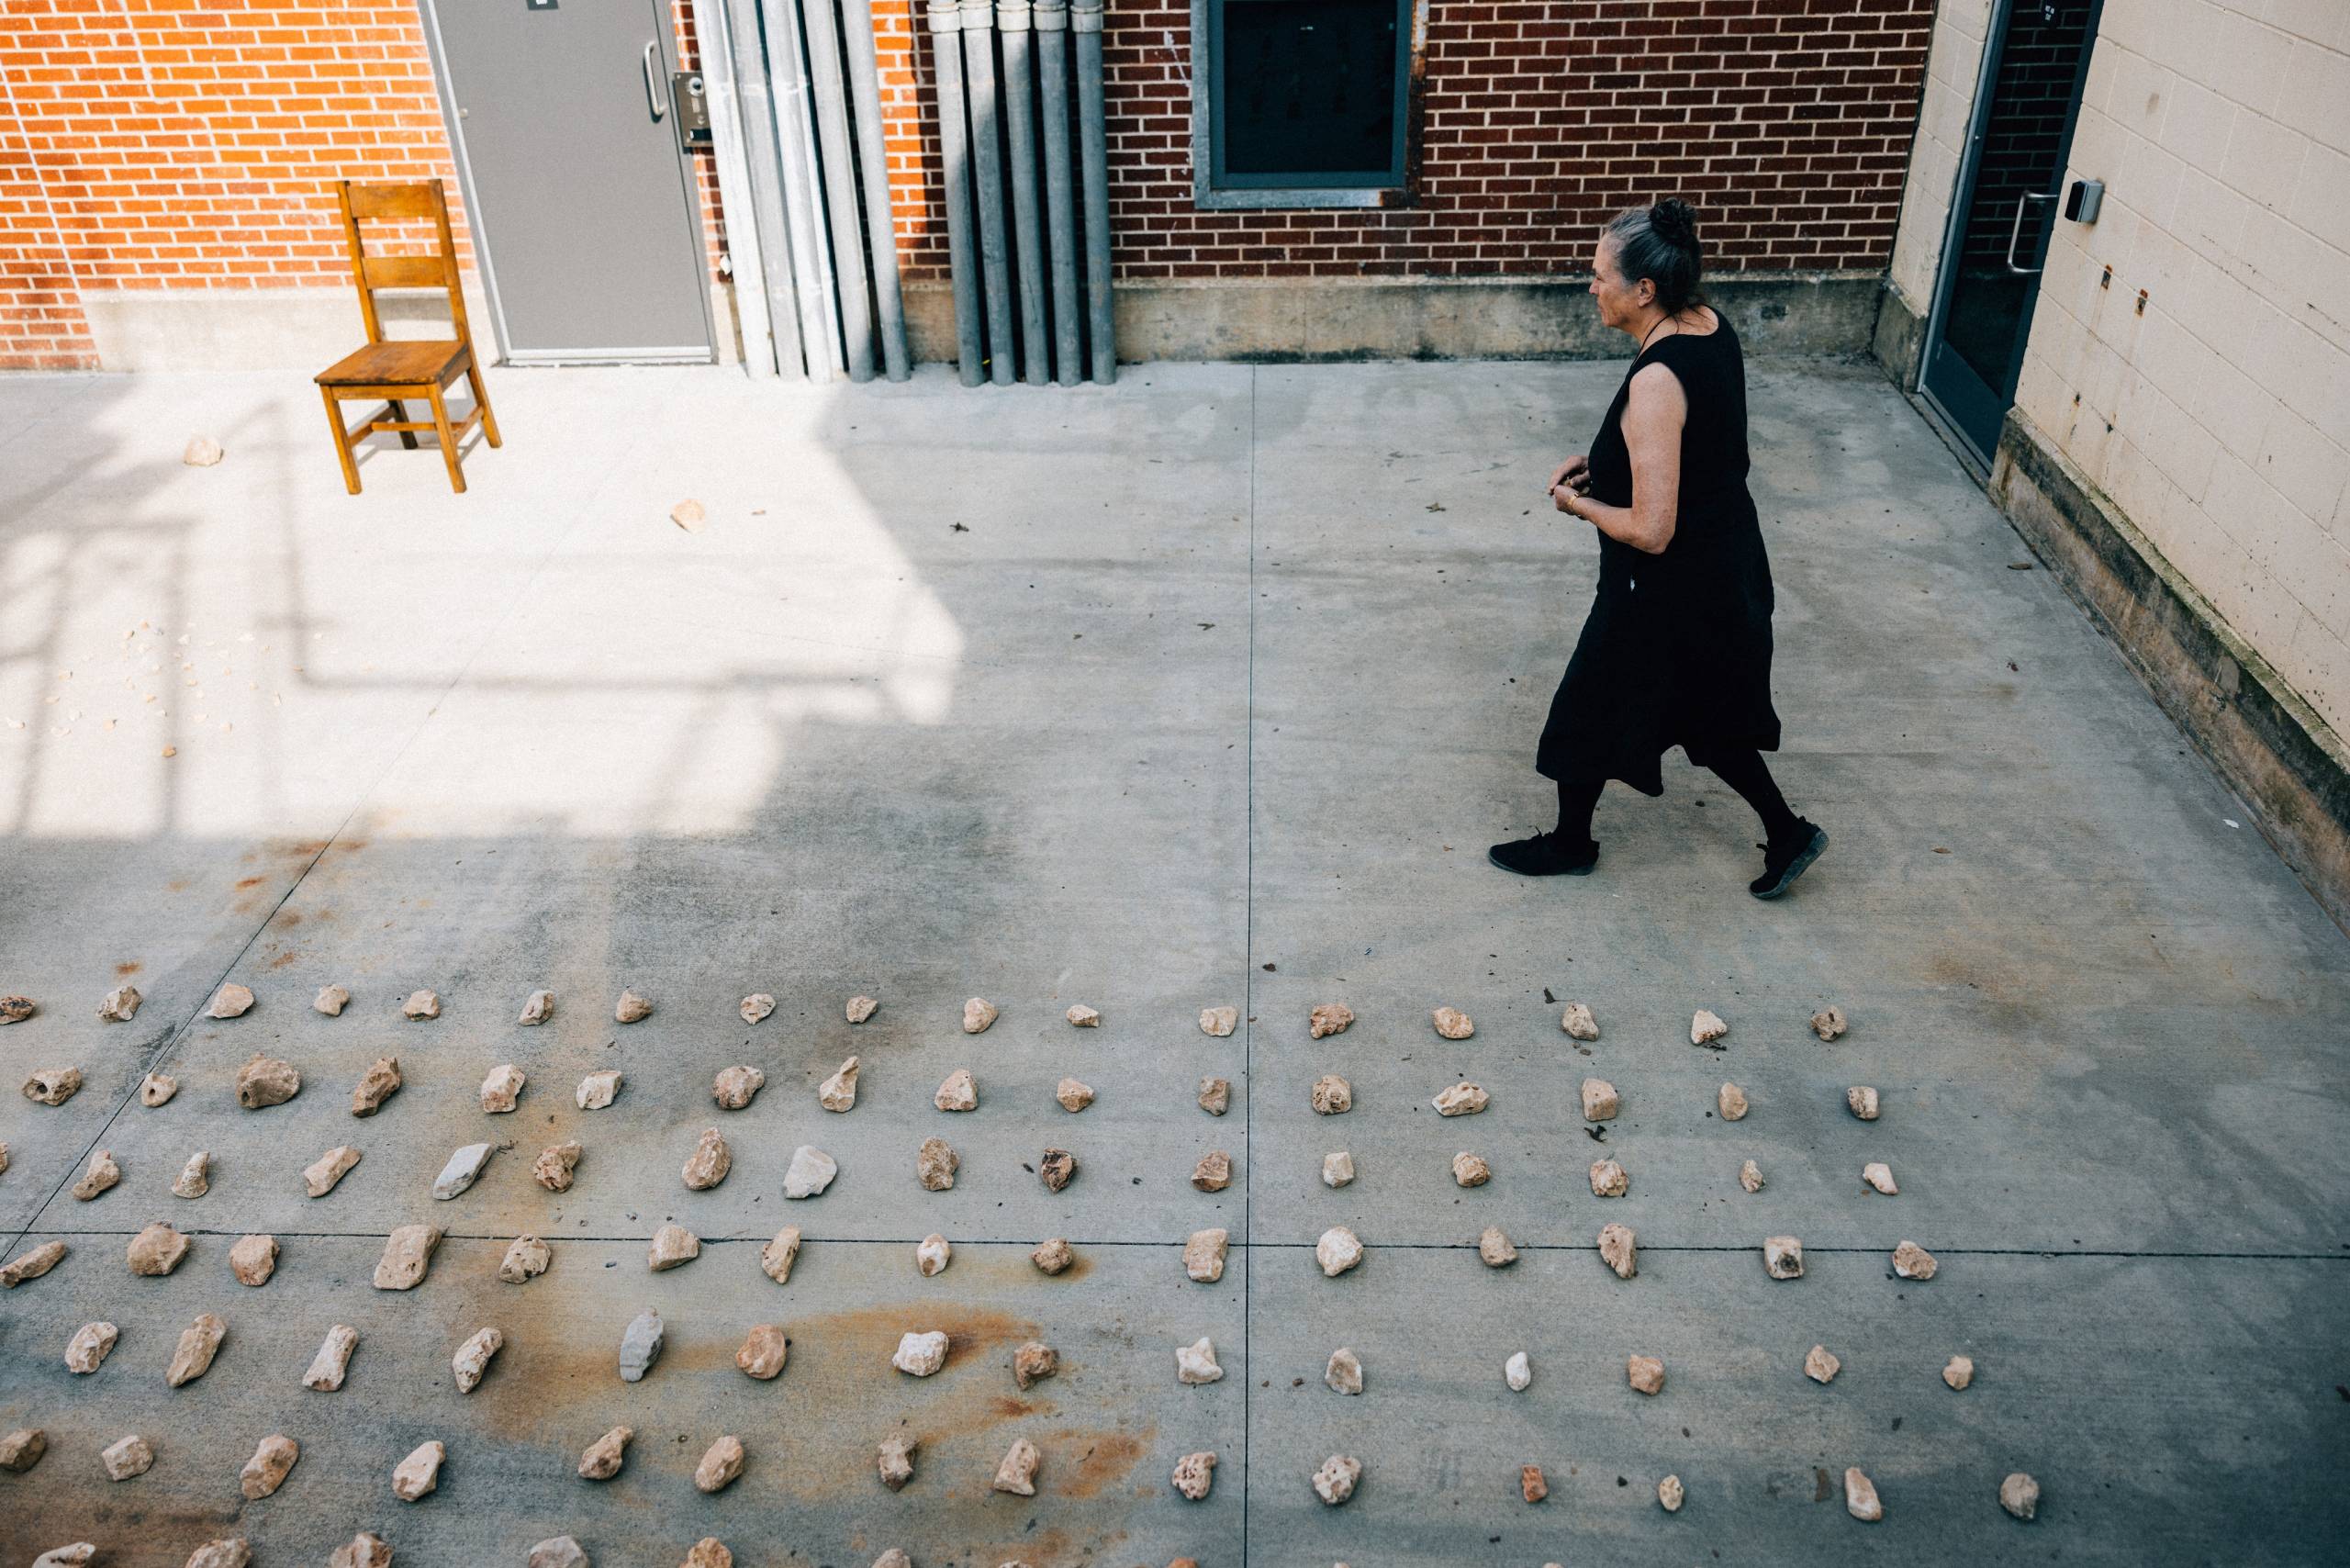 a woman wearing black walks across a cement floor organizing rocks into rows